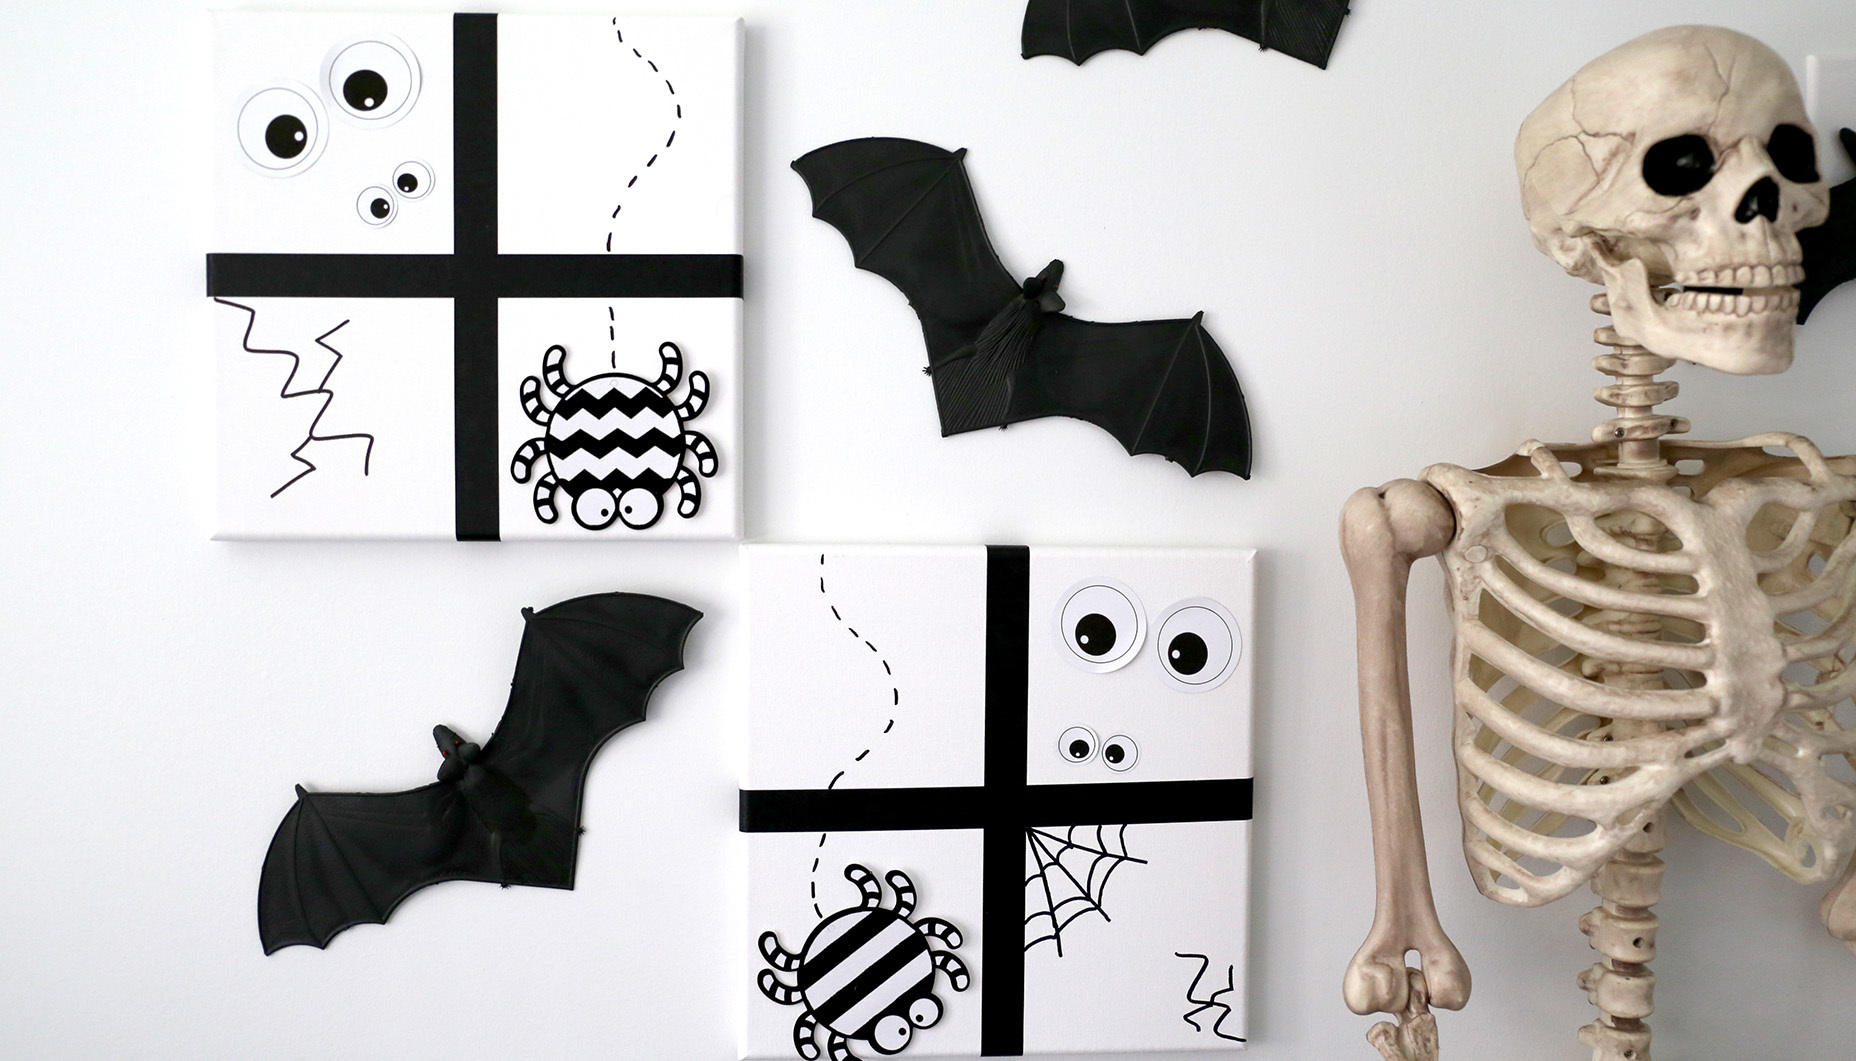 Qpout 72Pcs Halloween Skeleton Toys for Kids Mini Skeleton Model Skull Prop Decor Halloween Party Favor 